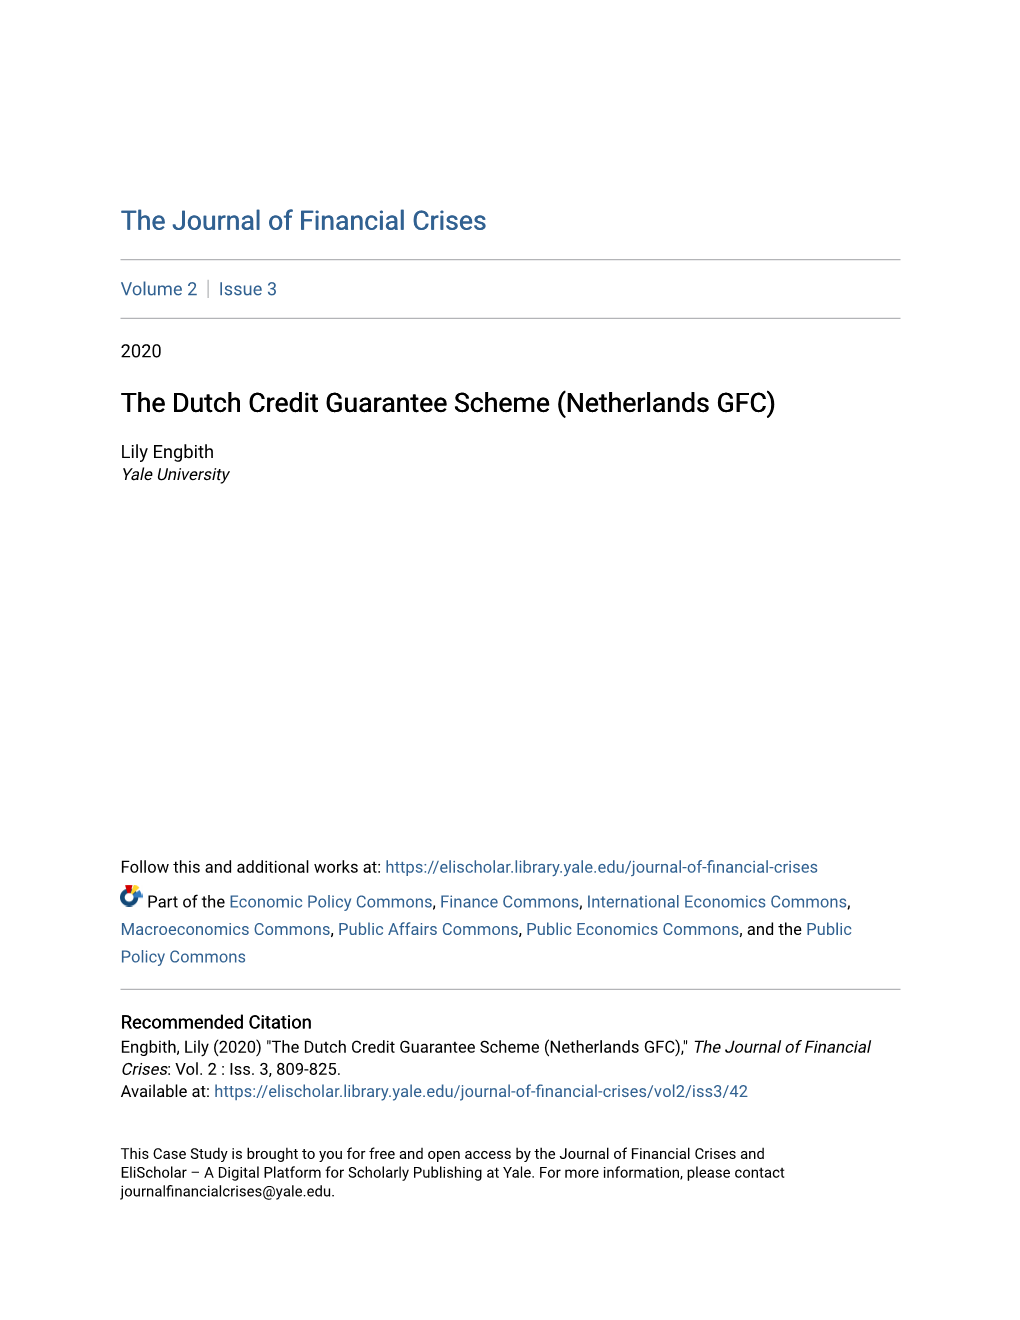 The Dutch Credit Guarantee Scheme (Netherlands GFC)